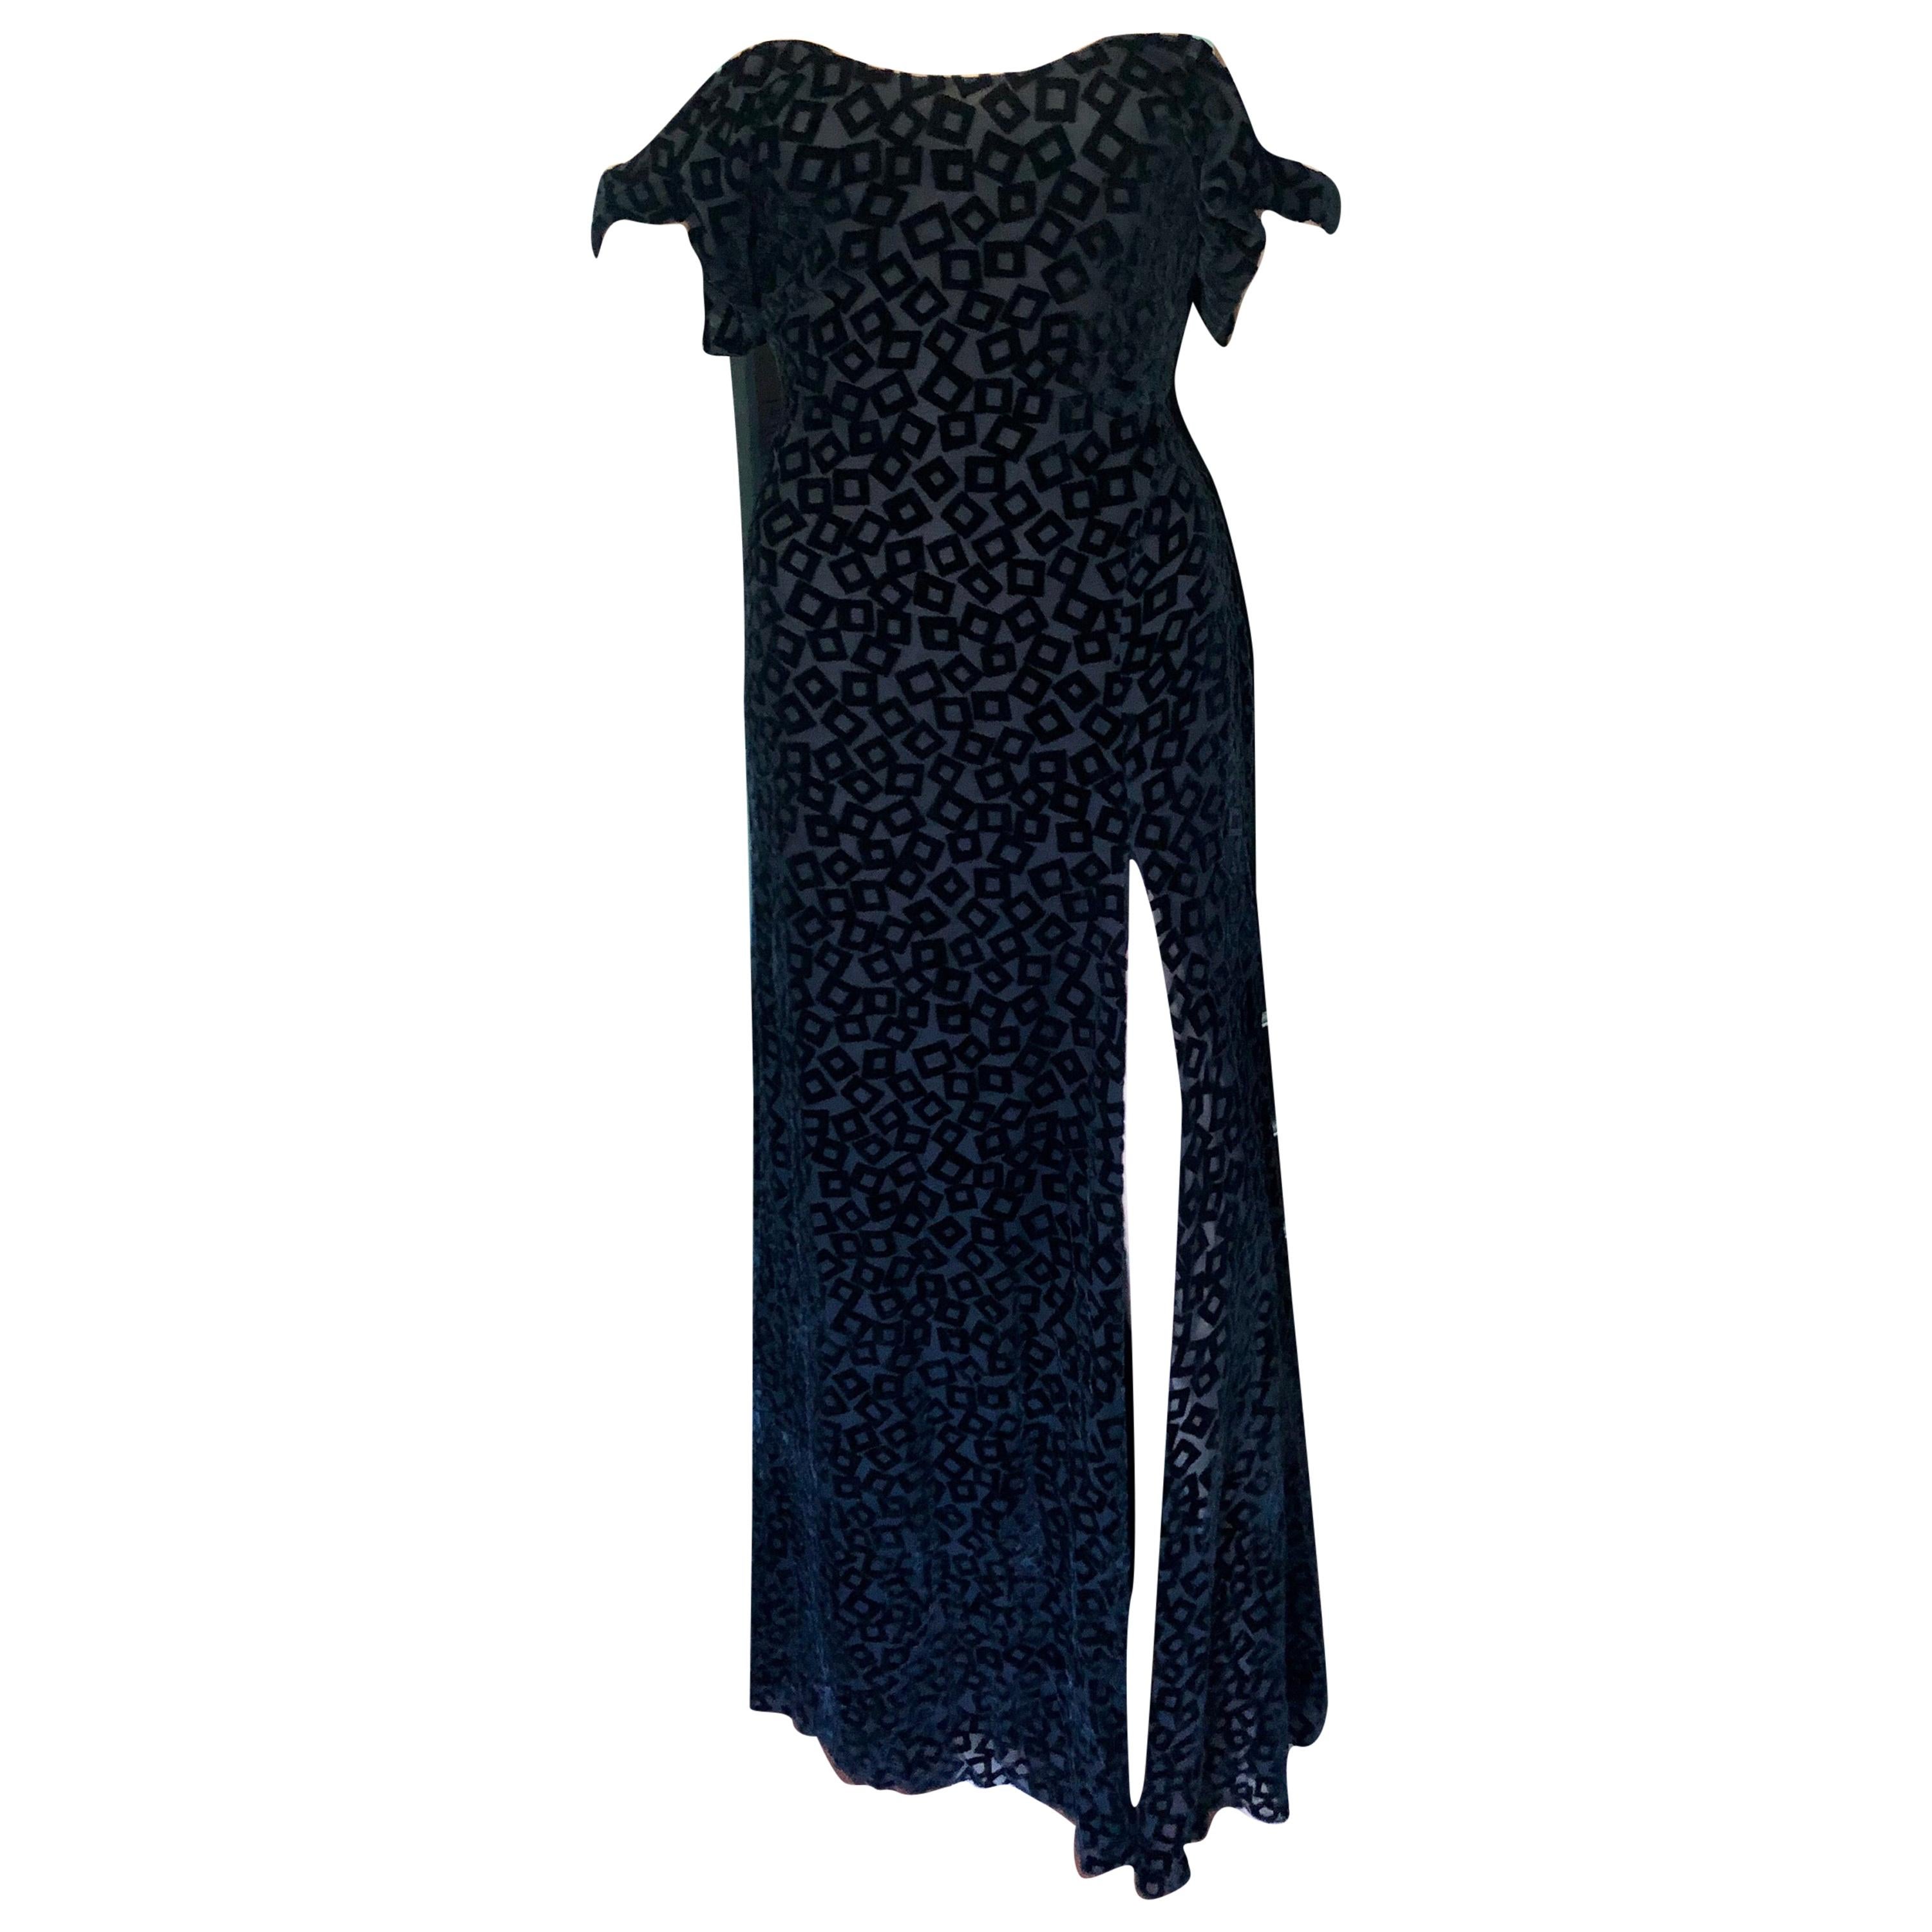 Gianni Versace S/S 1999 Vintage Black Evening Dress Gown